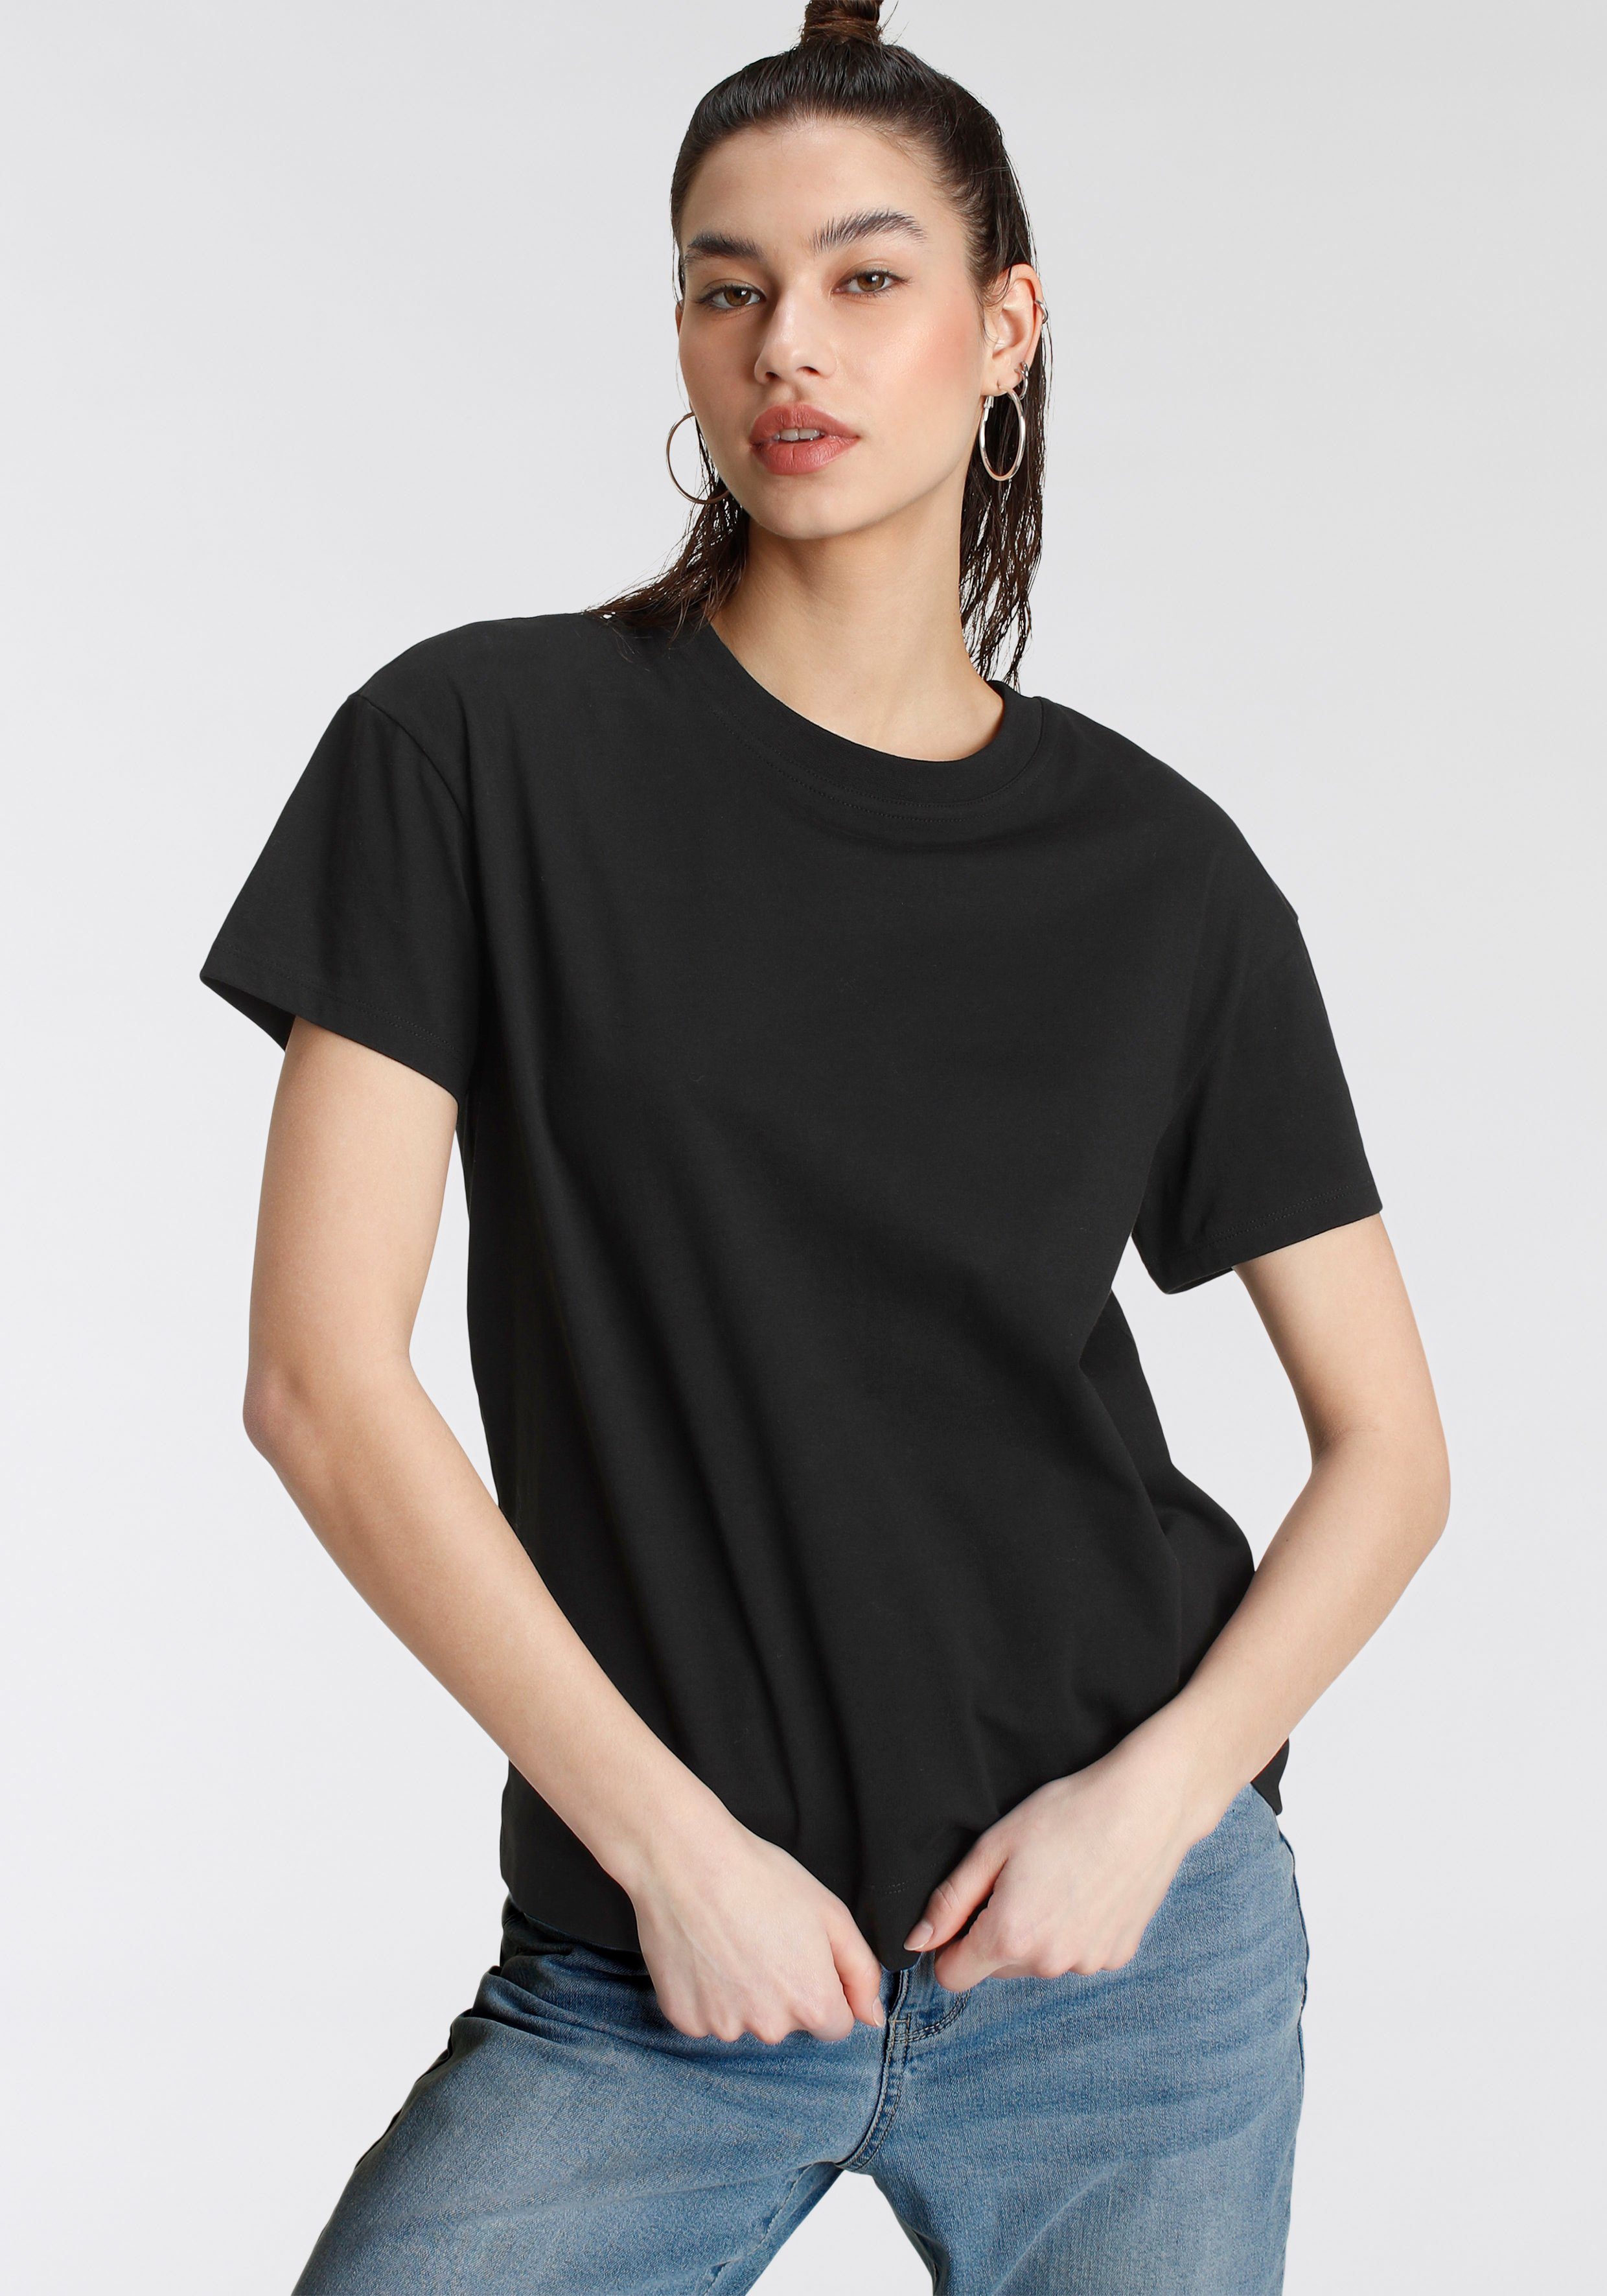 Oversized-Look Tamaris im T-Shirt schwarz